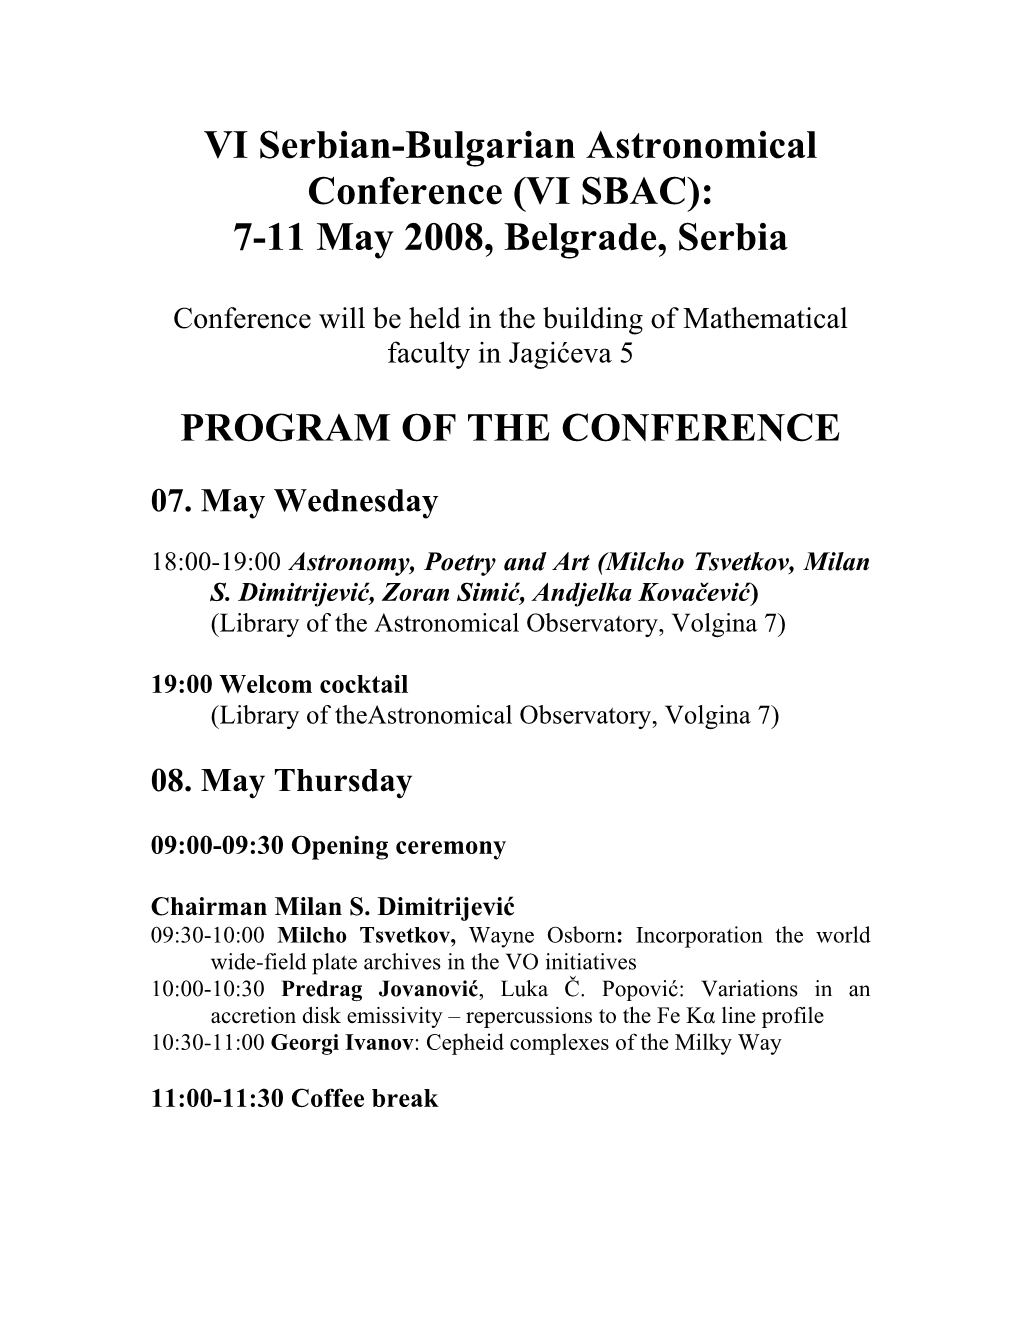 VI Serbian-Bulgarian Astronomical Conference (VI SBAC): 7-11 May 2008, Belgrade, Serbia